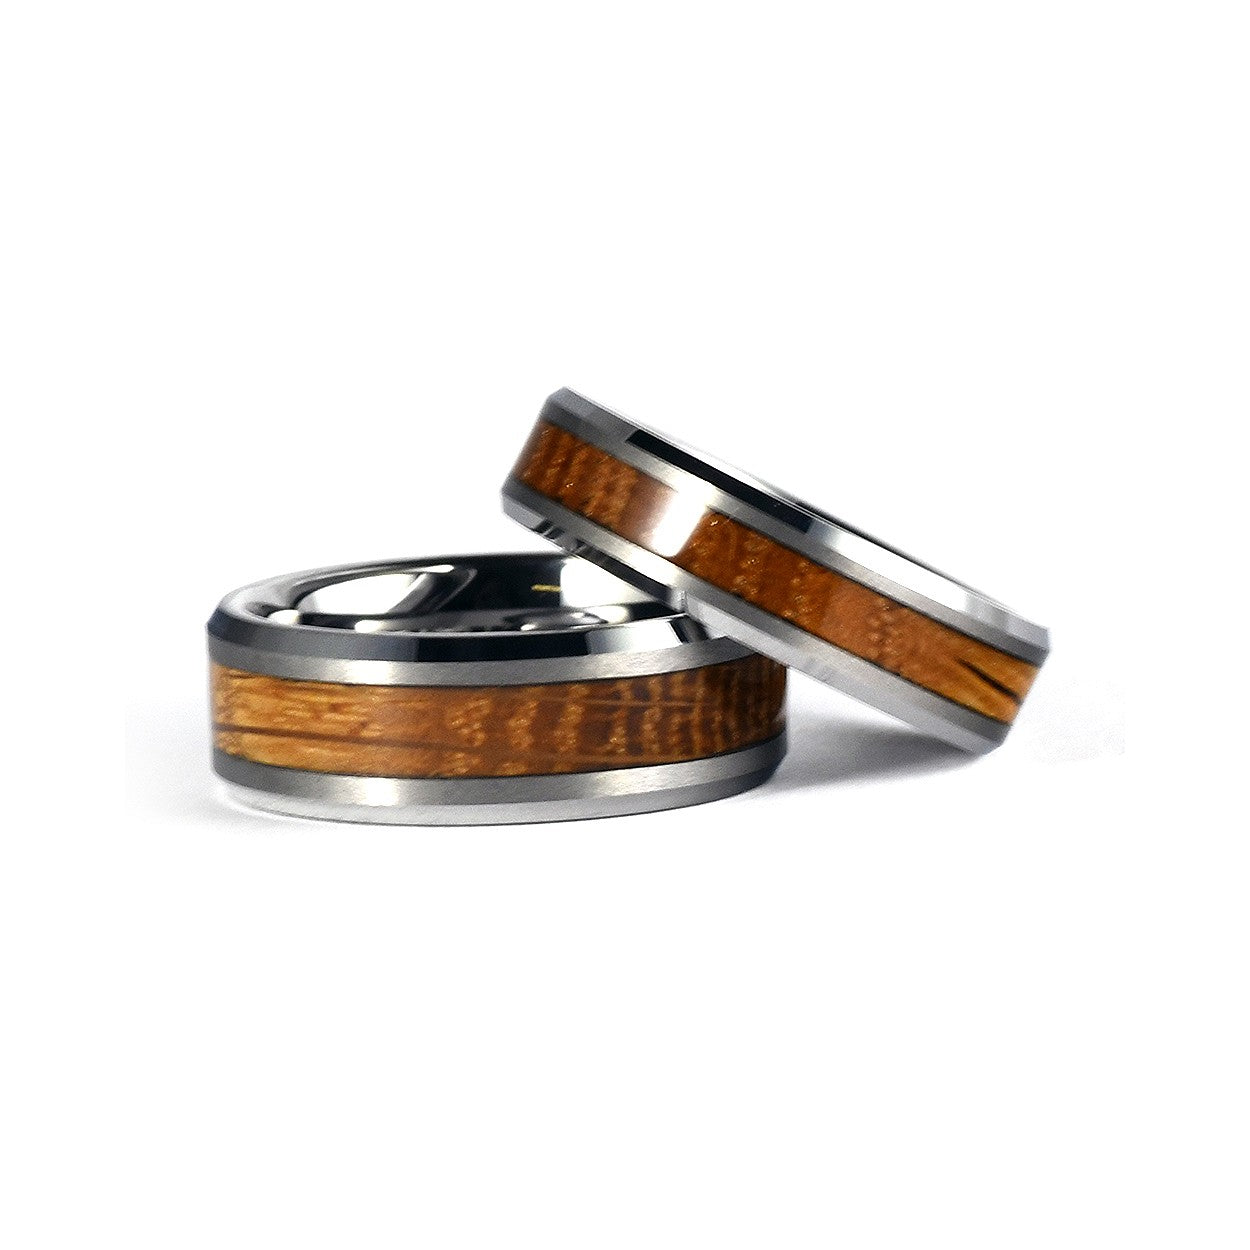 The Jack - Tungsten / Wood Whiskey Barrel Men's Wedding Ring